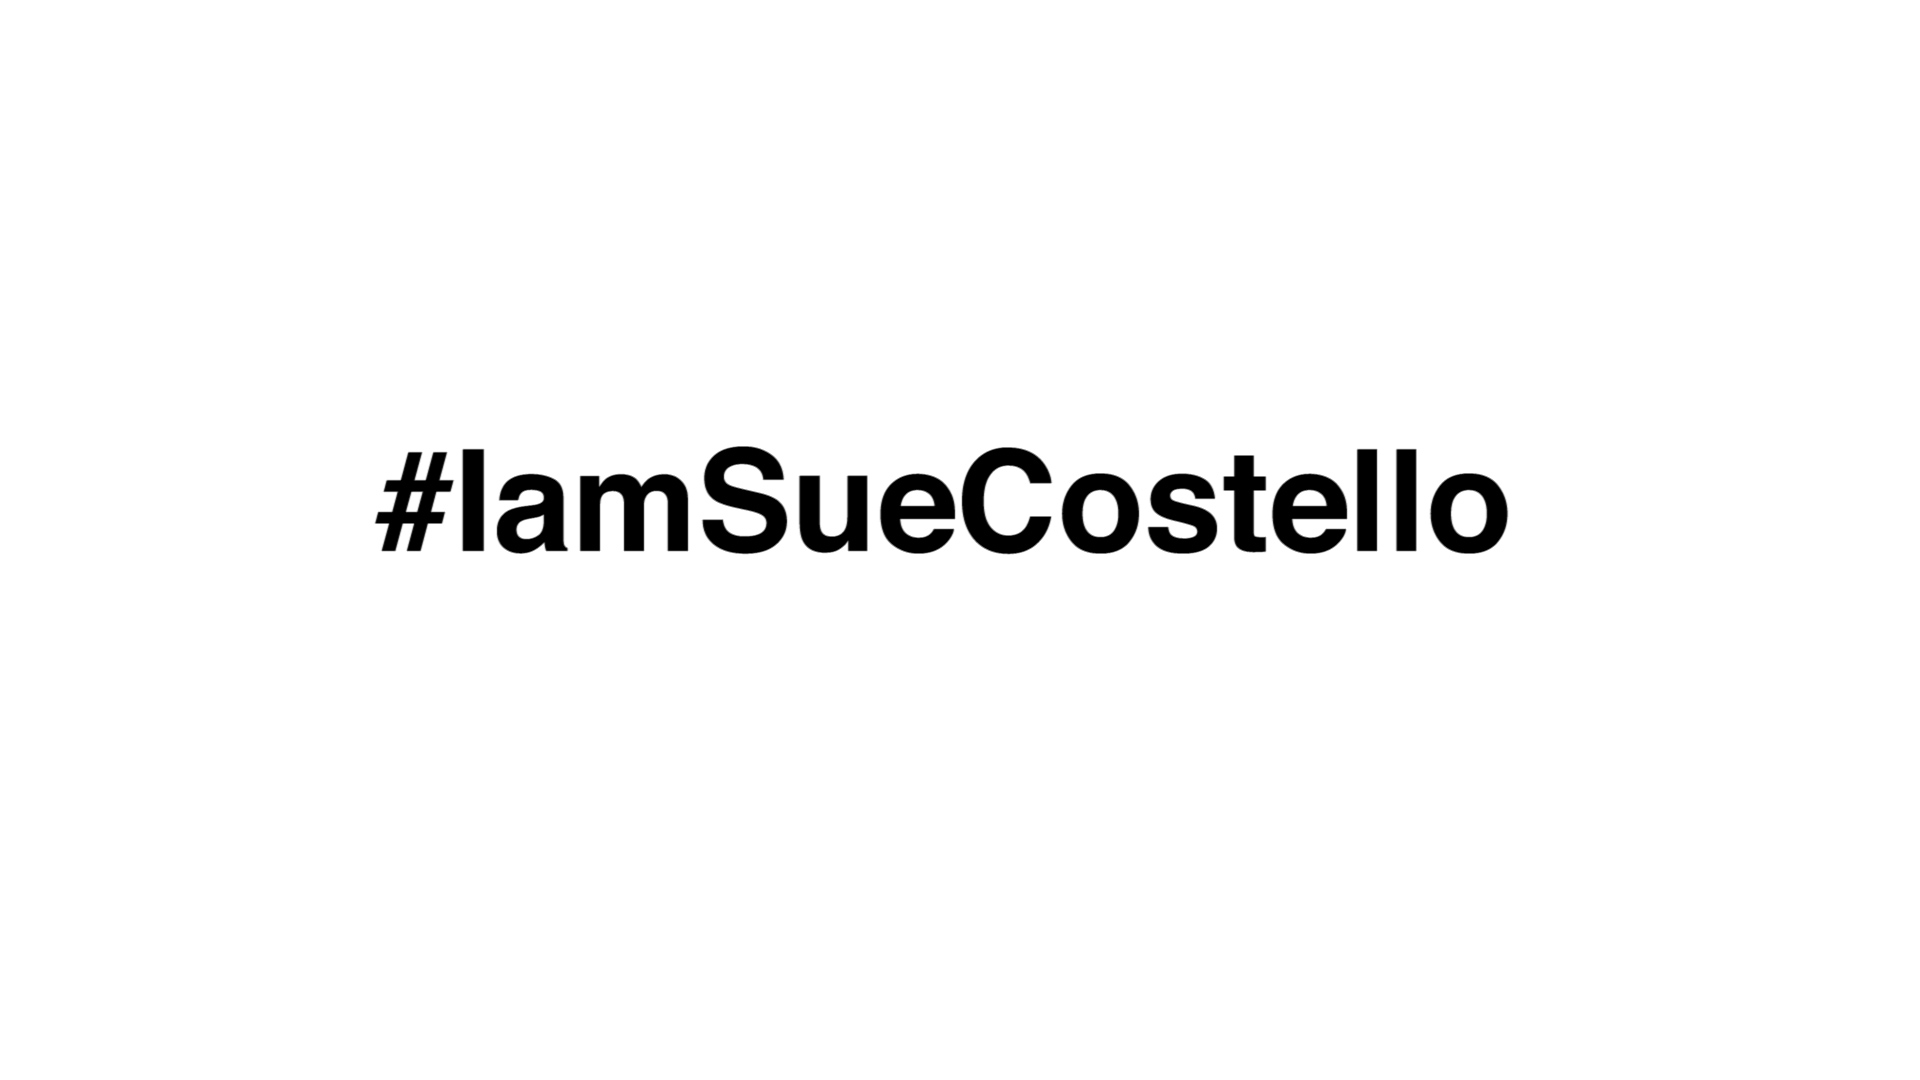 #IamSueCostello at Broadway Comedy Club on Wednesday March 8th #IamSueCostello